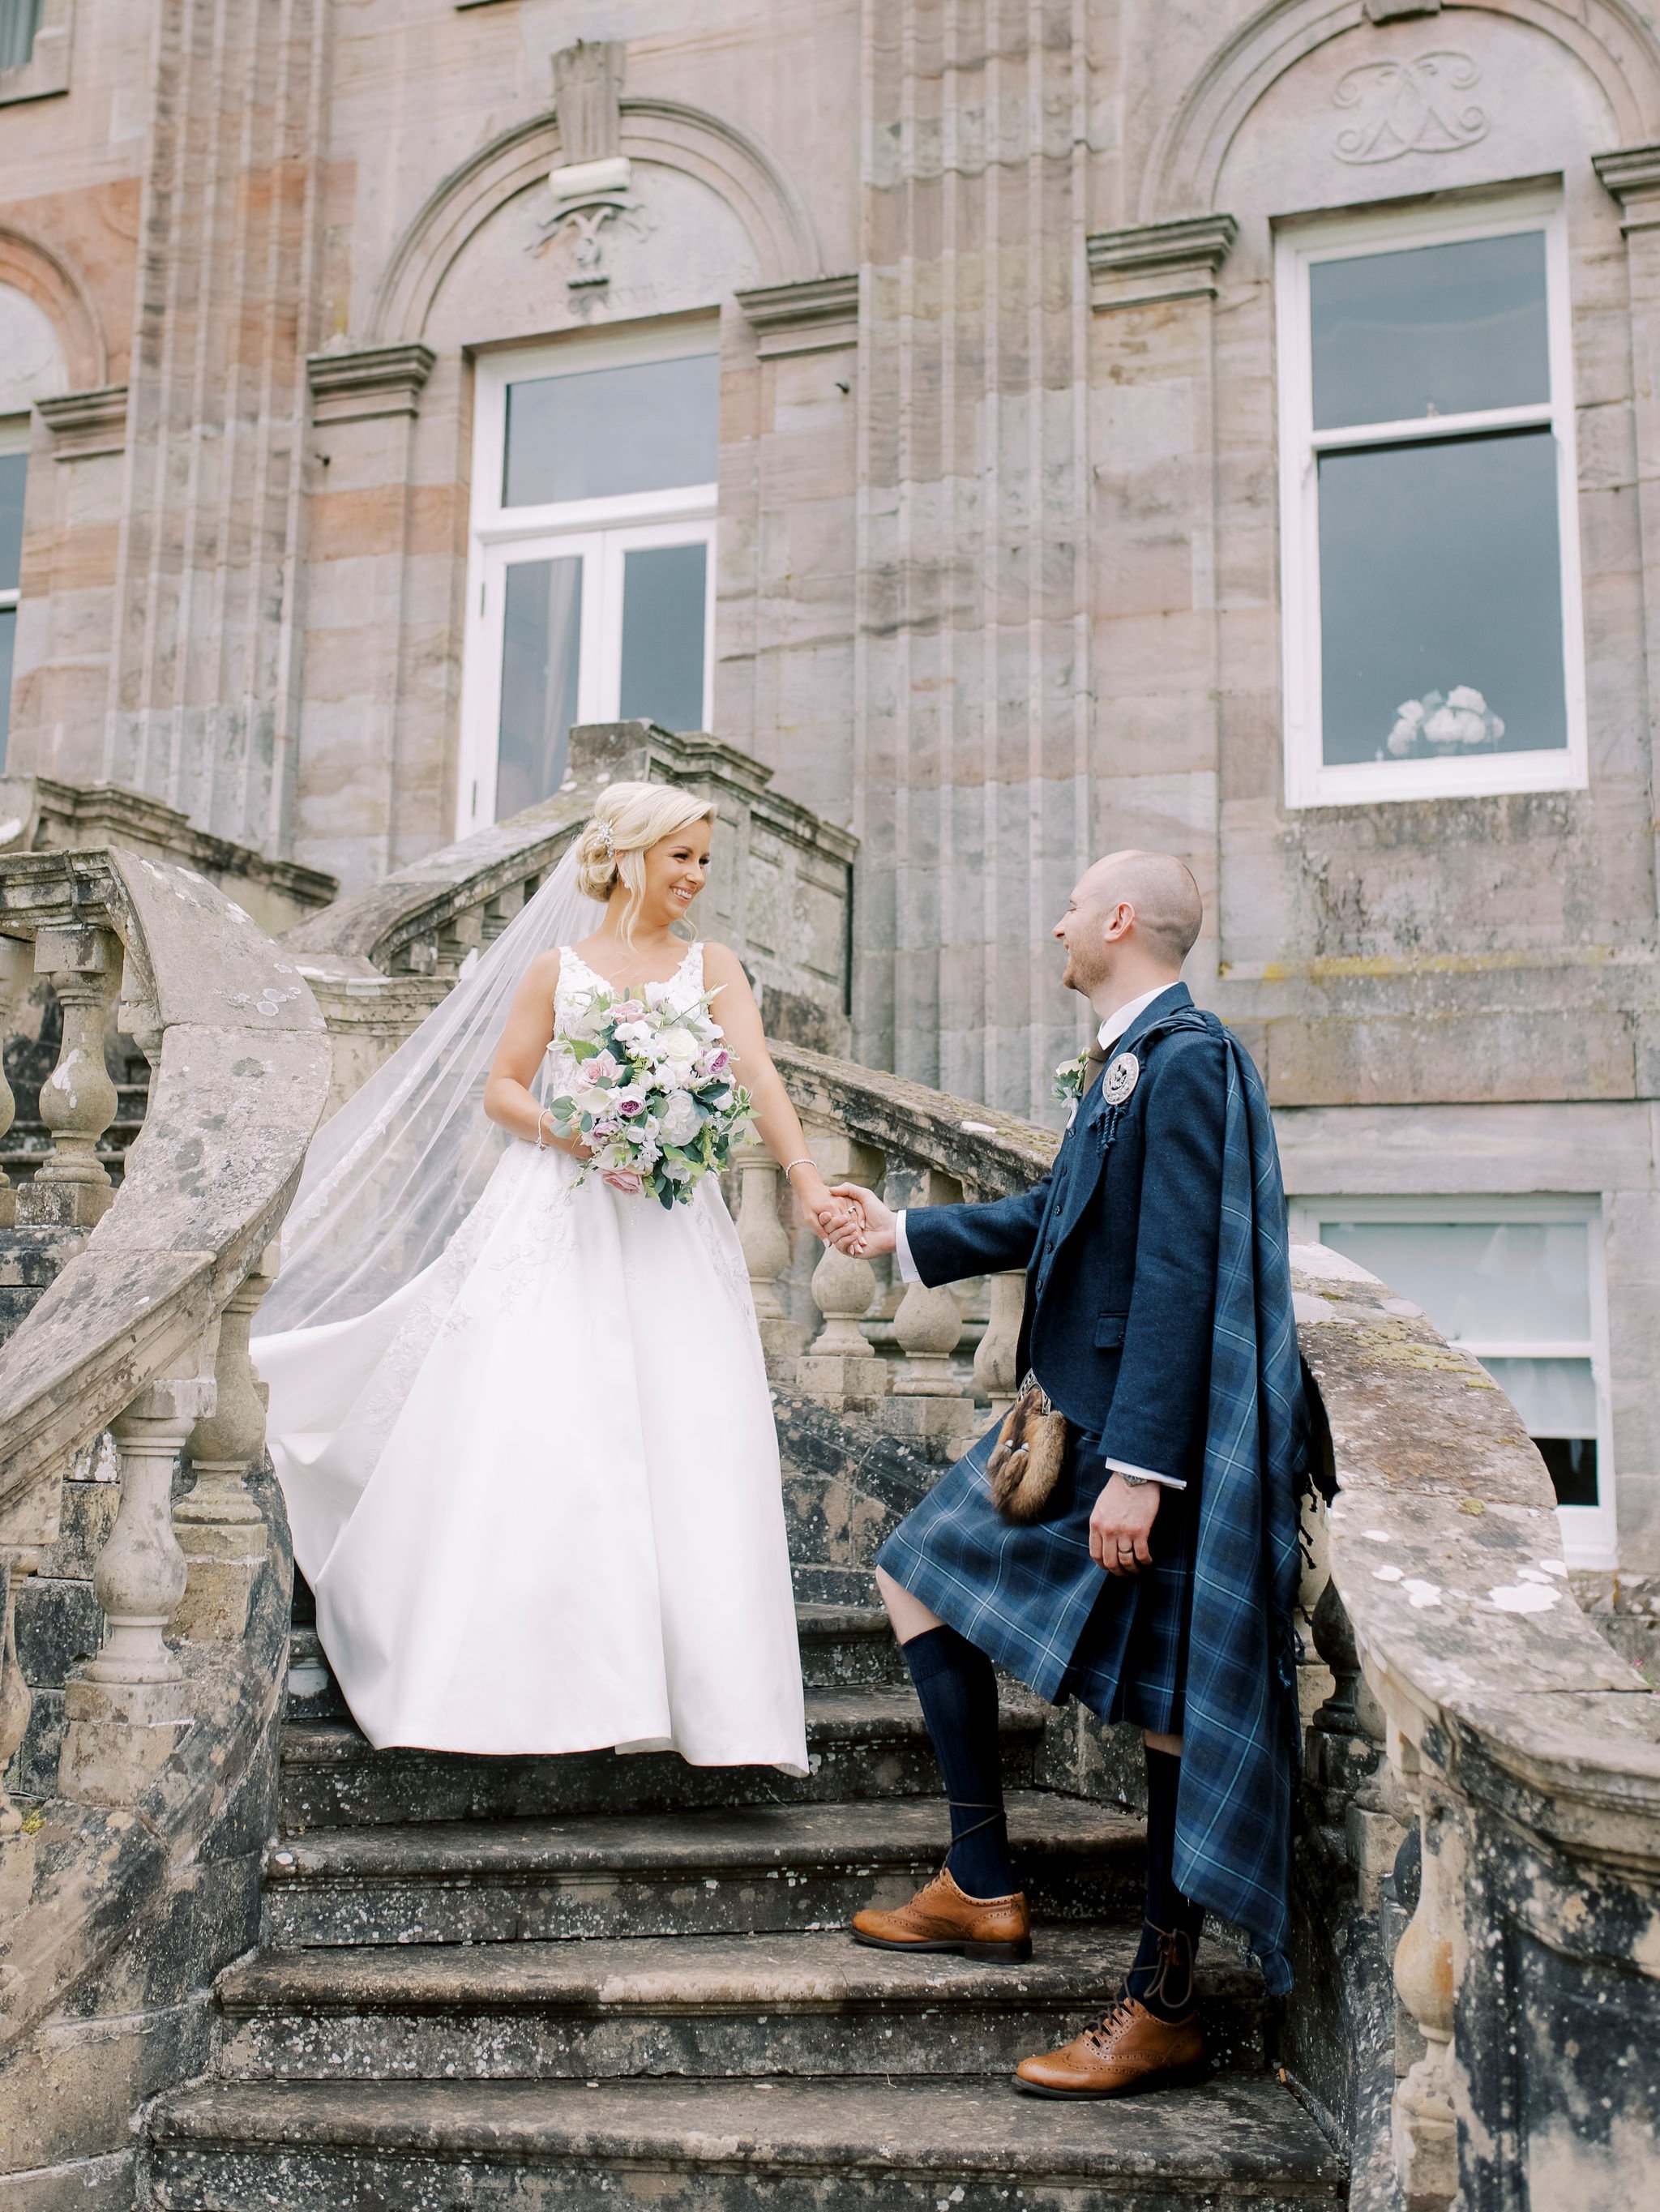 37_springkell-house-wedding-photographer-dumfries-scotland-bride-groom-steps-smiling.jpg